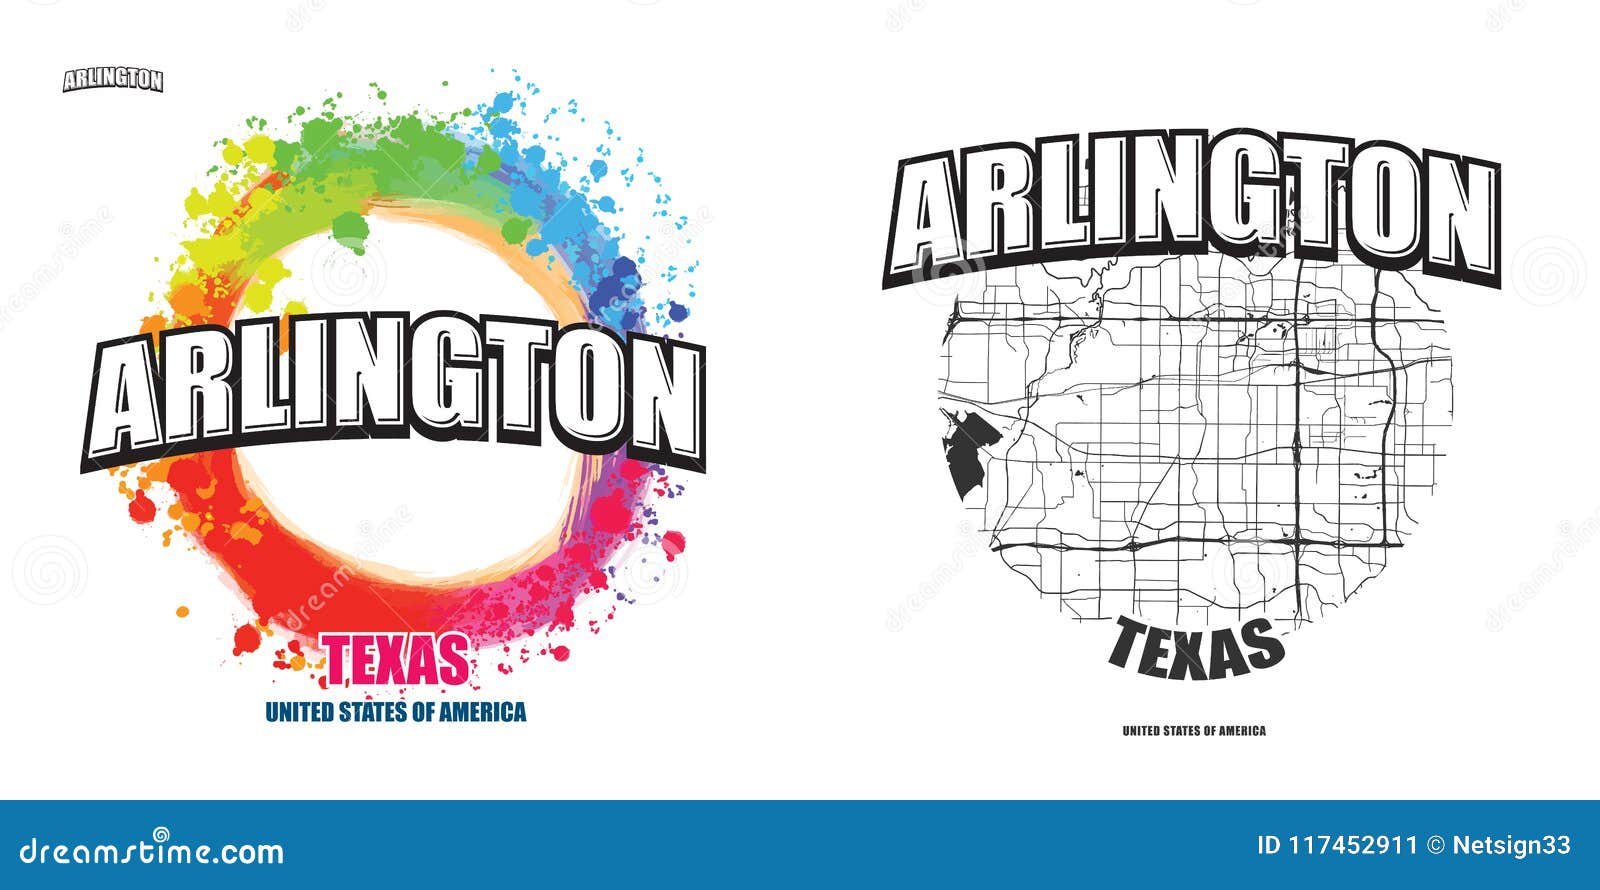 arlington, texas, two logo artworks